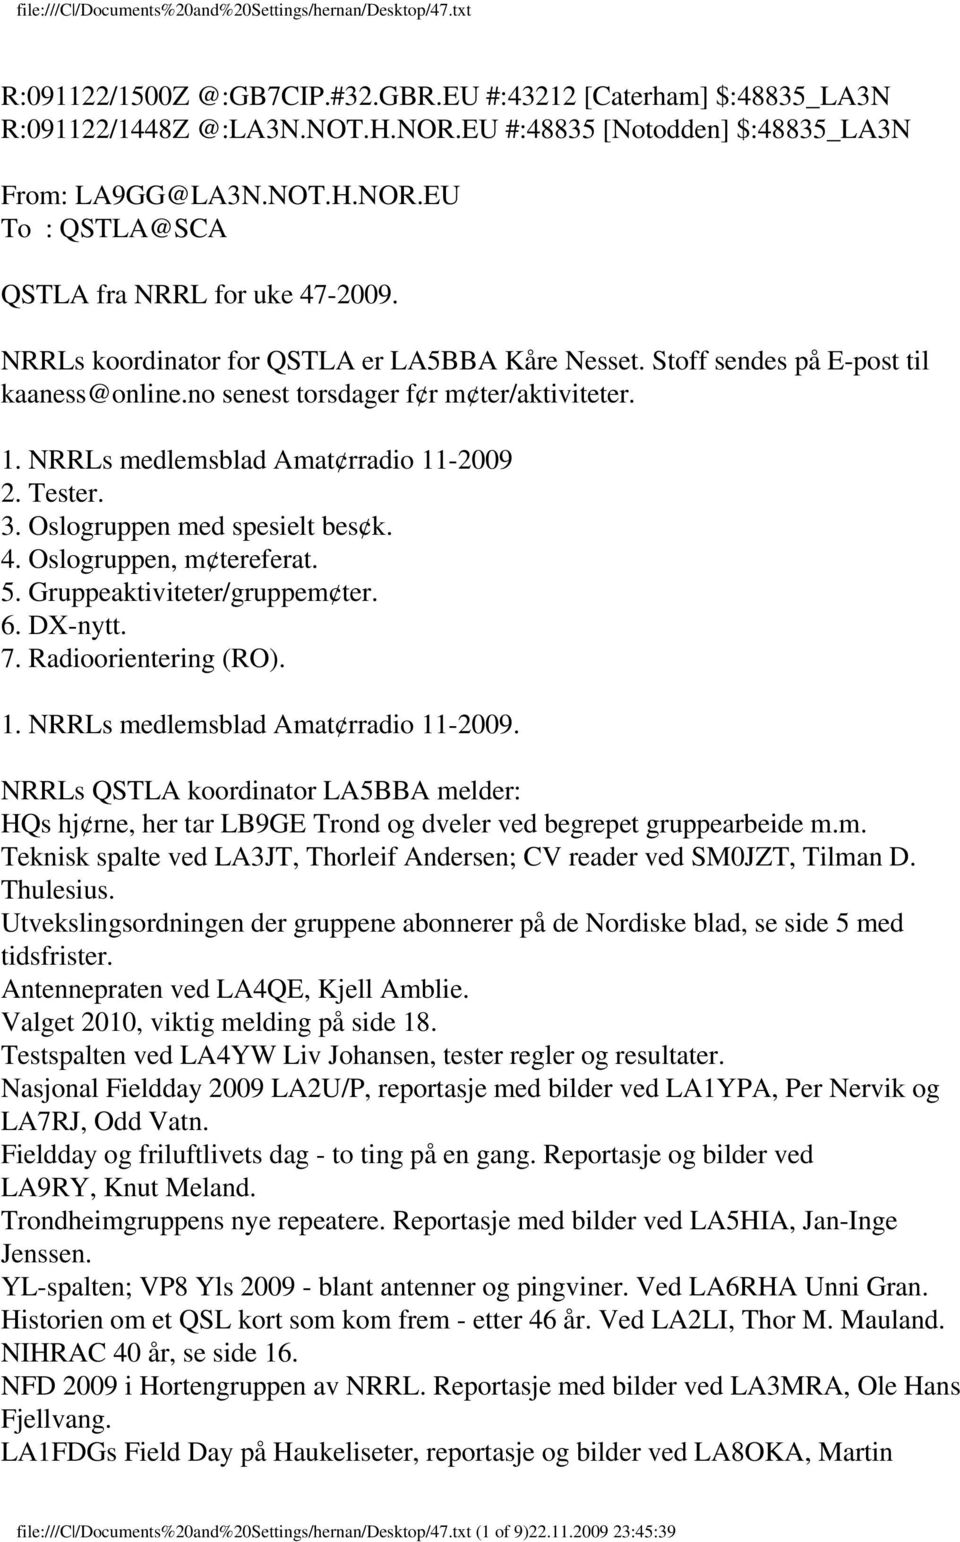 Oslogruppen med spesielt bes k. 4. Oslogruppen, m tereferat. 5. Gruppeaktiviteter/gruppem ter. 6. DX-nytt. 7. Radioorientering (RO). 1. NRRLs medlemsblad Amat rradio 11-2009.